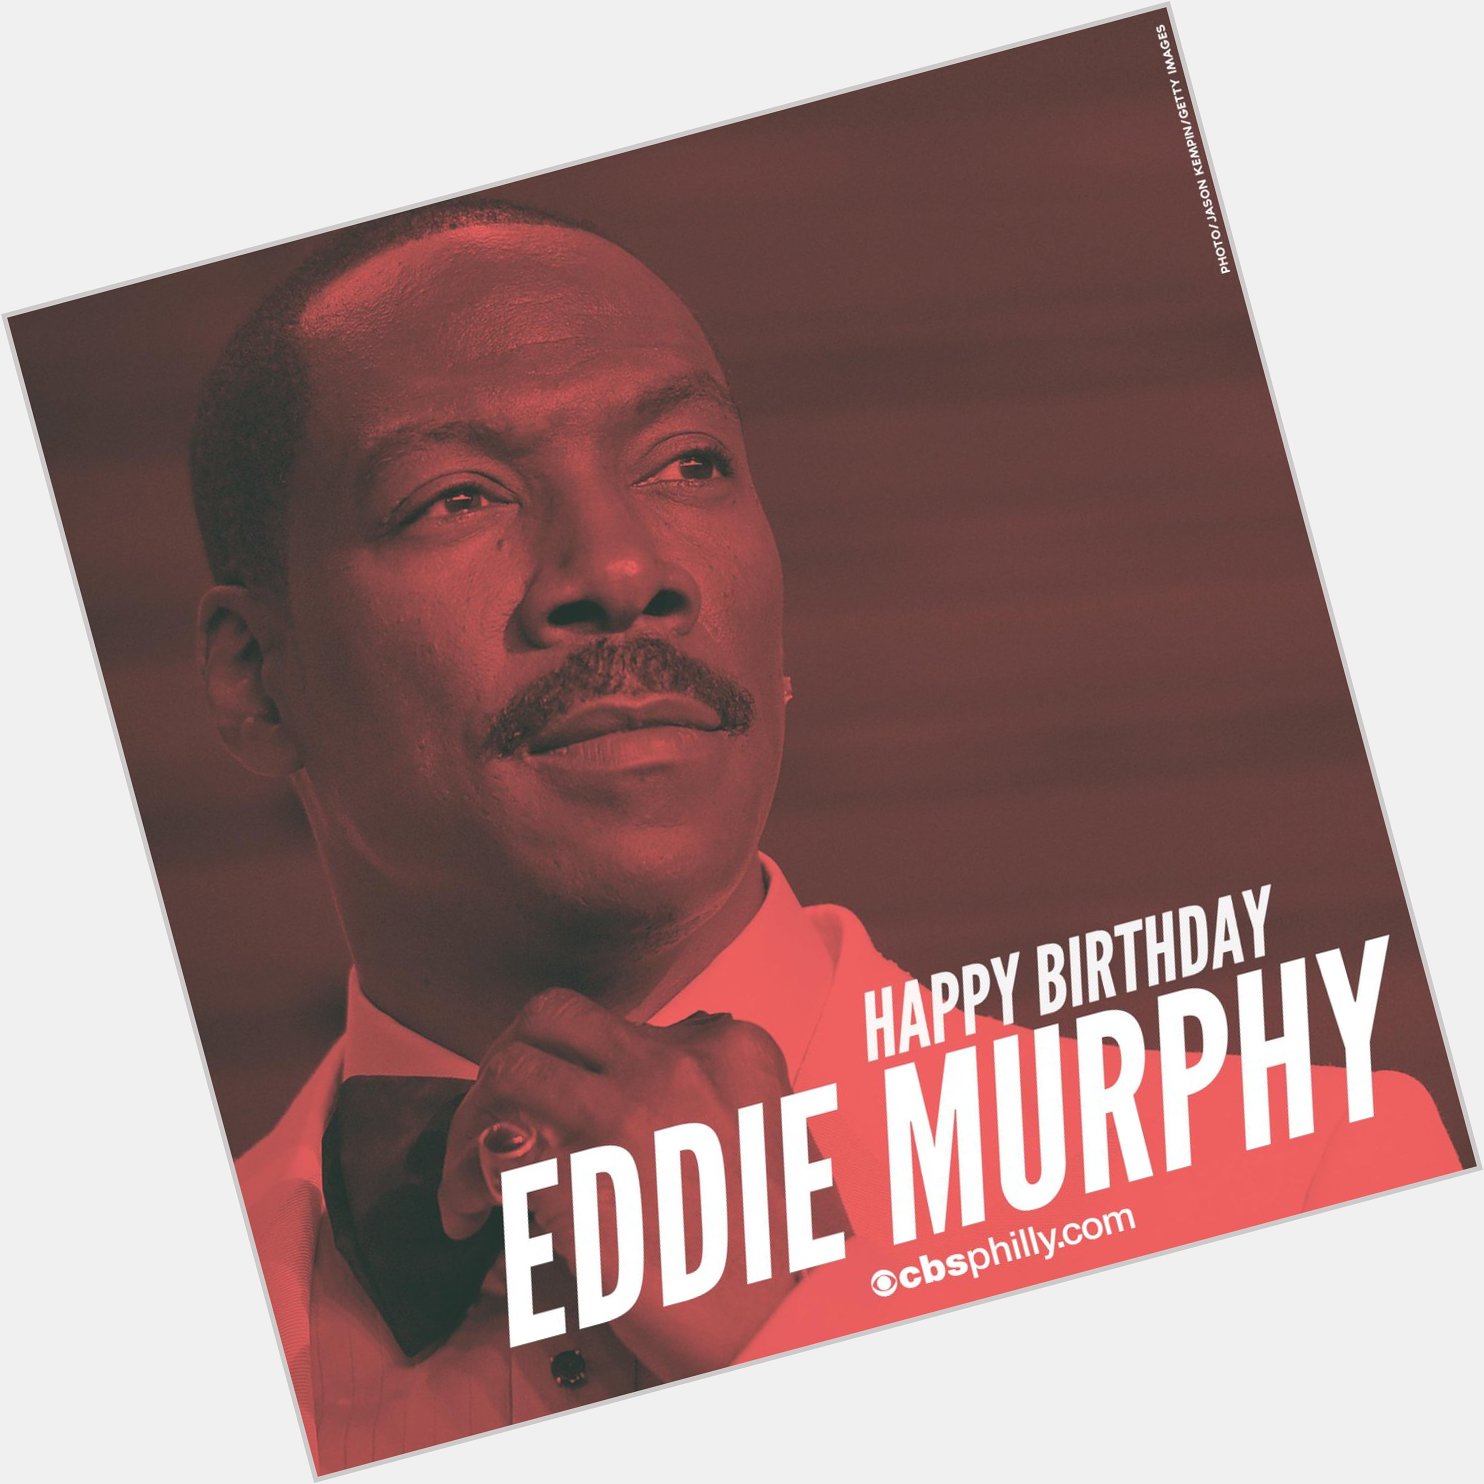 Happy 56th birthday Eddie Murphy !! 